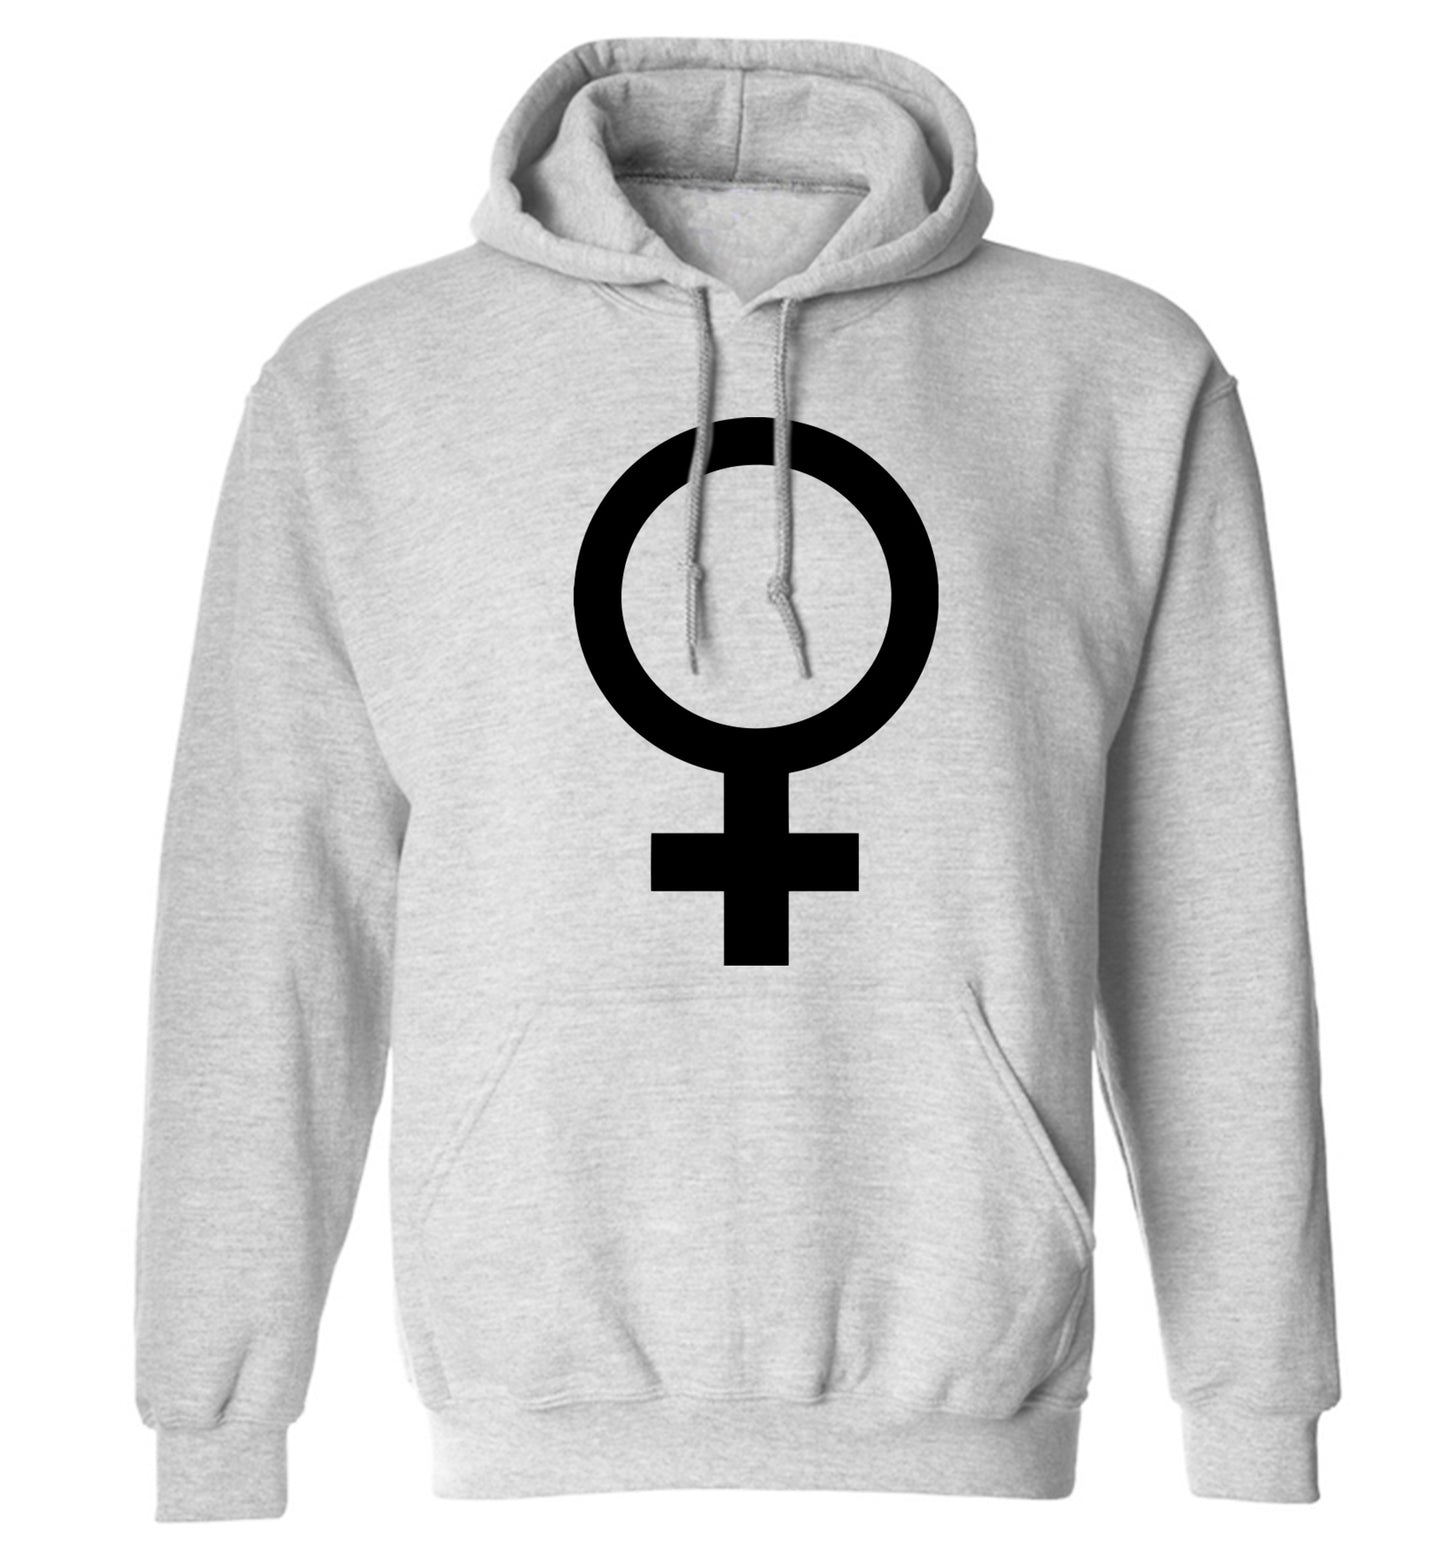 Female symbol large adults unisex grey hoodie 2XL